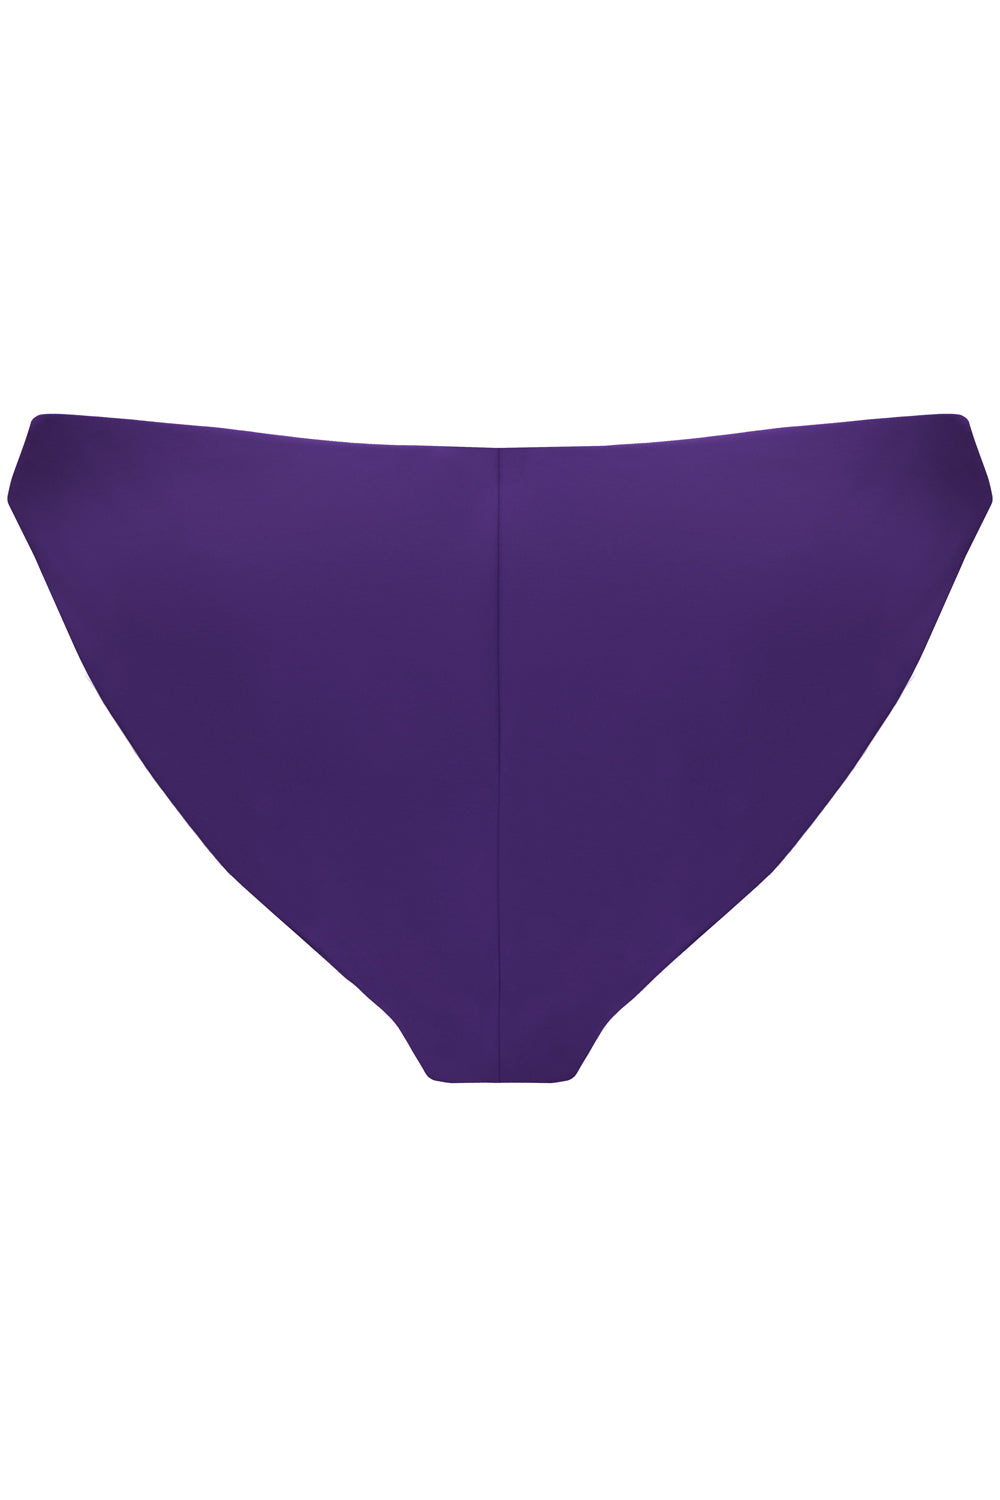 Radiya Violet bikini bottom